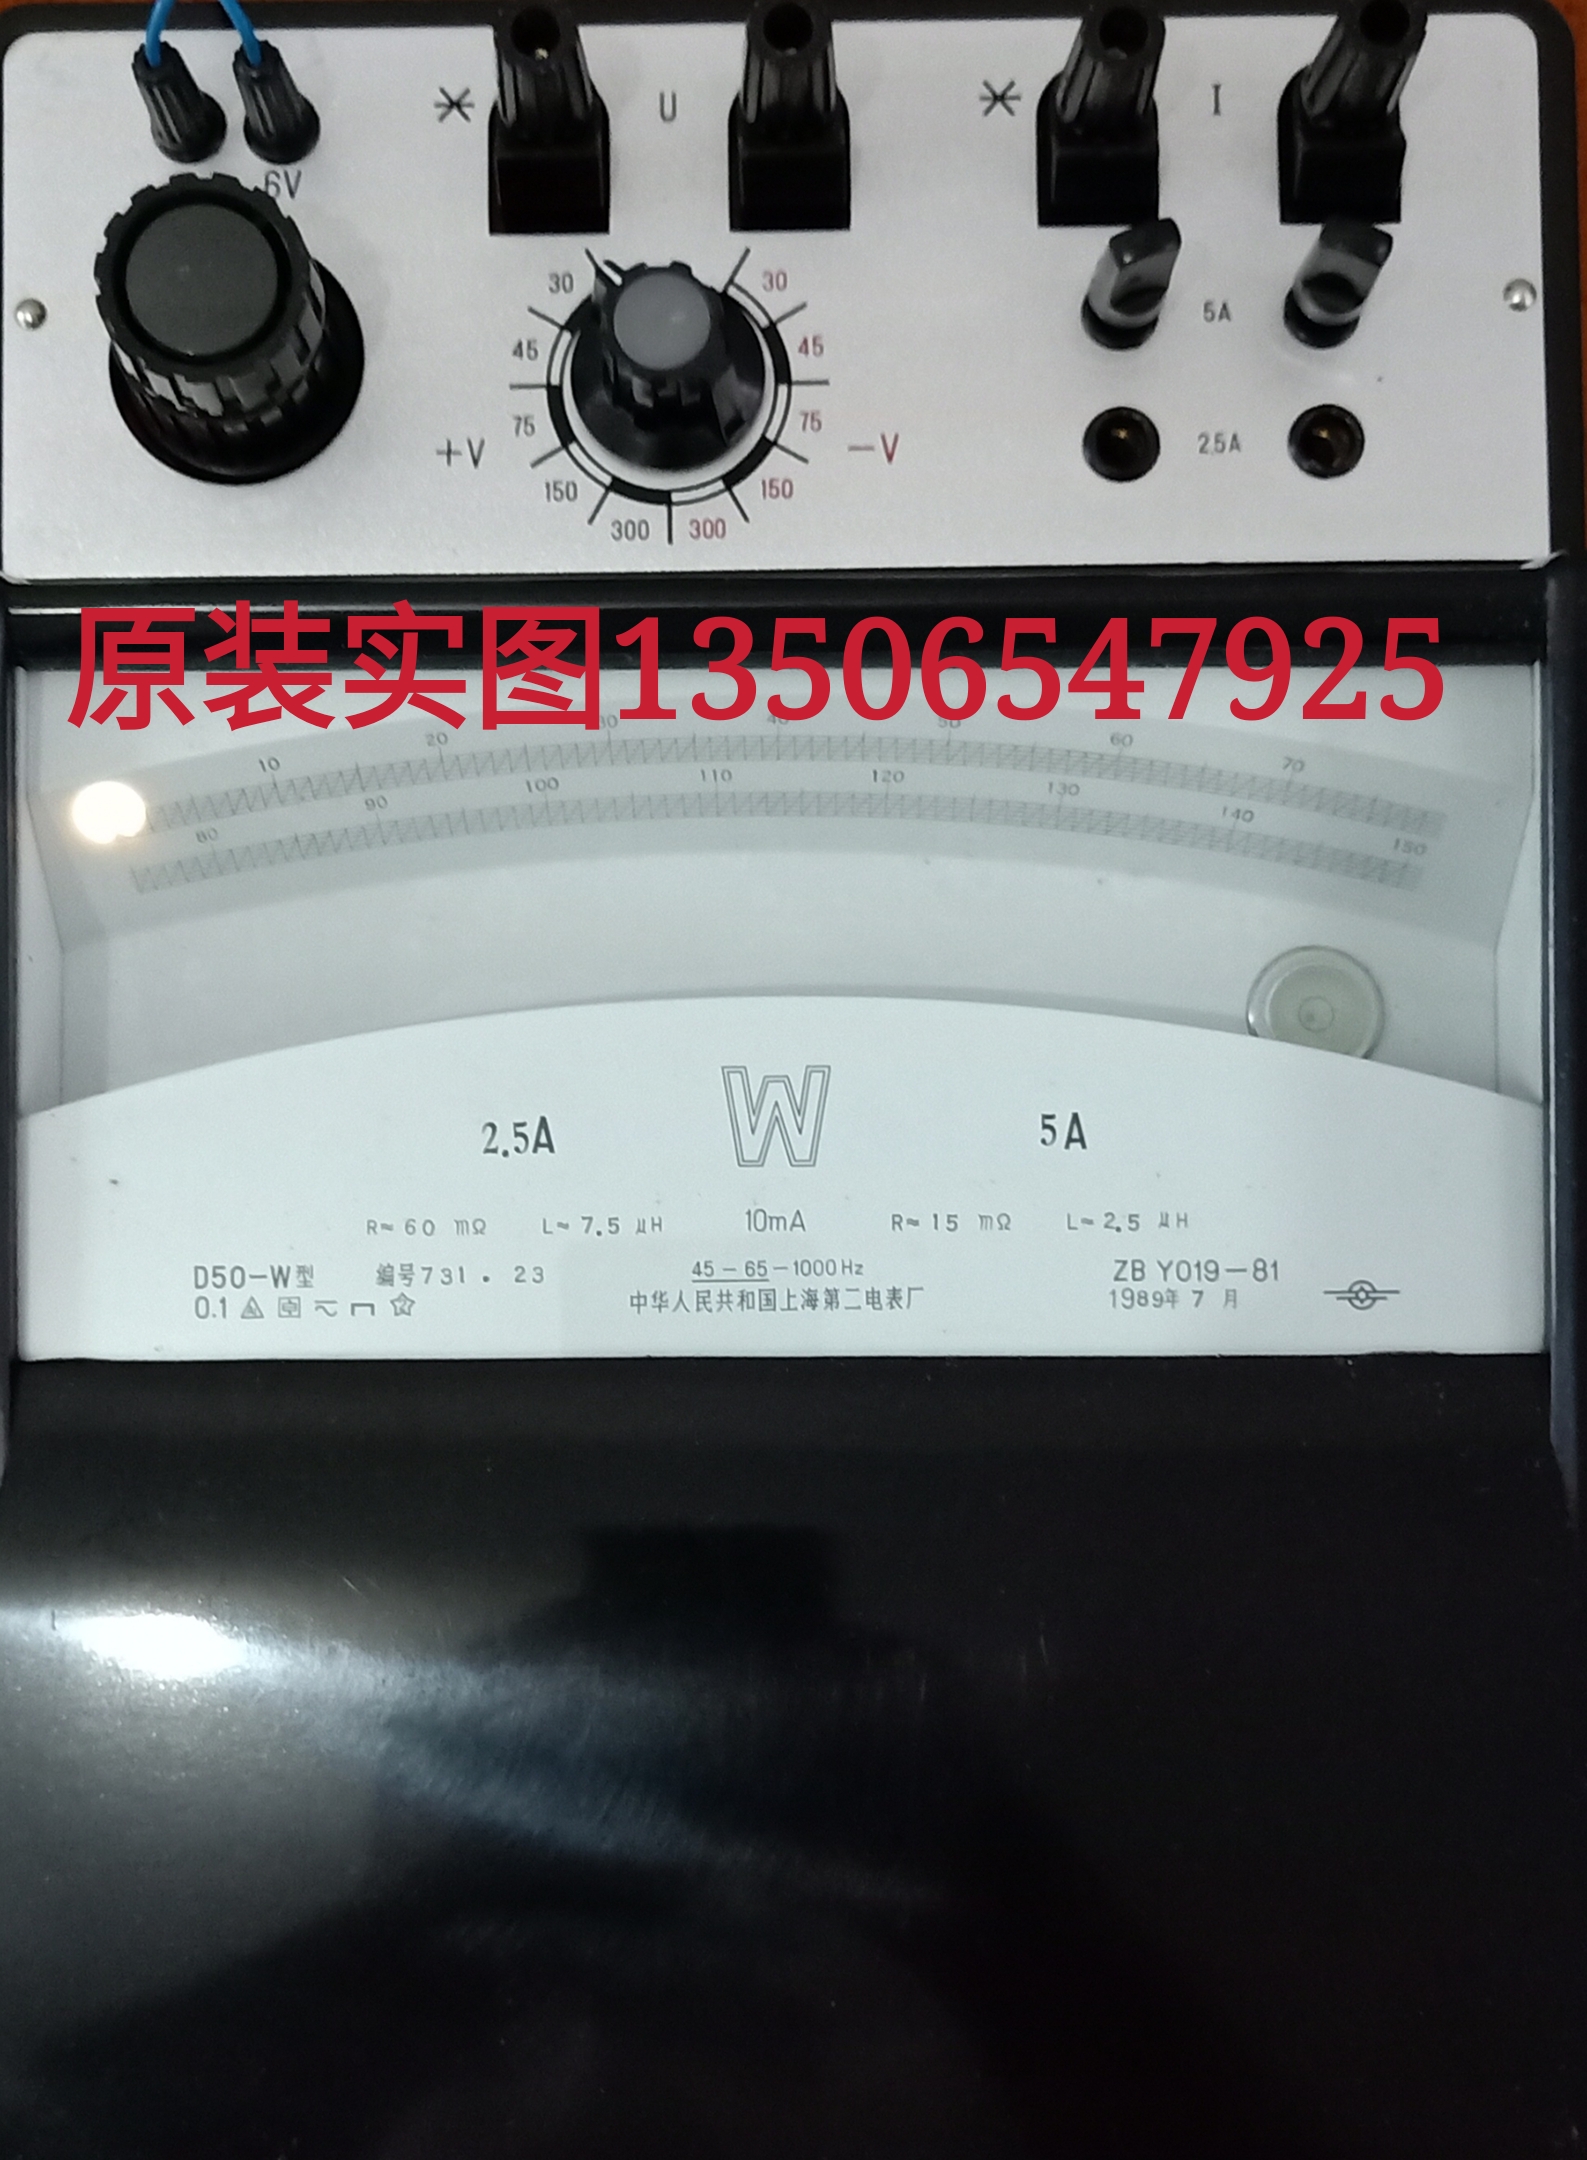 Original spot Shanghai Second Electric Meter Factory D50W type 0.1 electric wattmeter laboratory standard meter